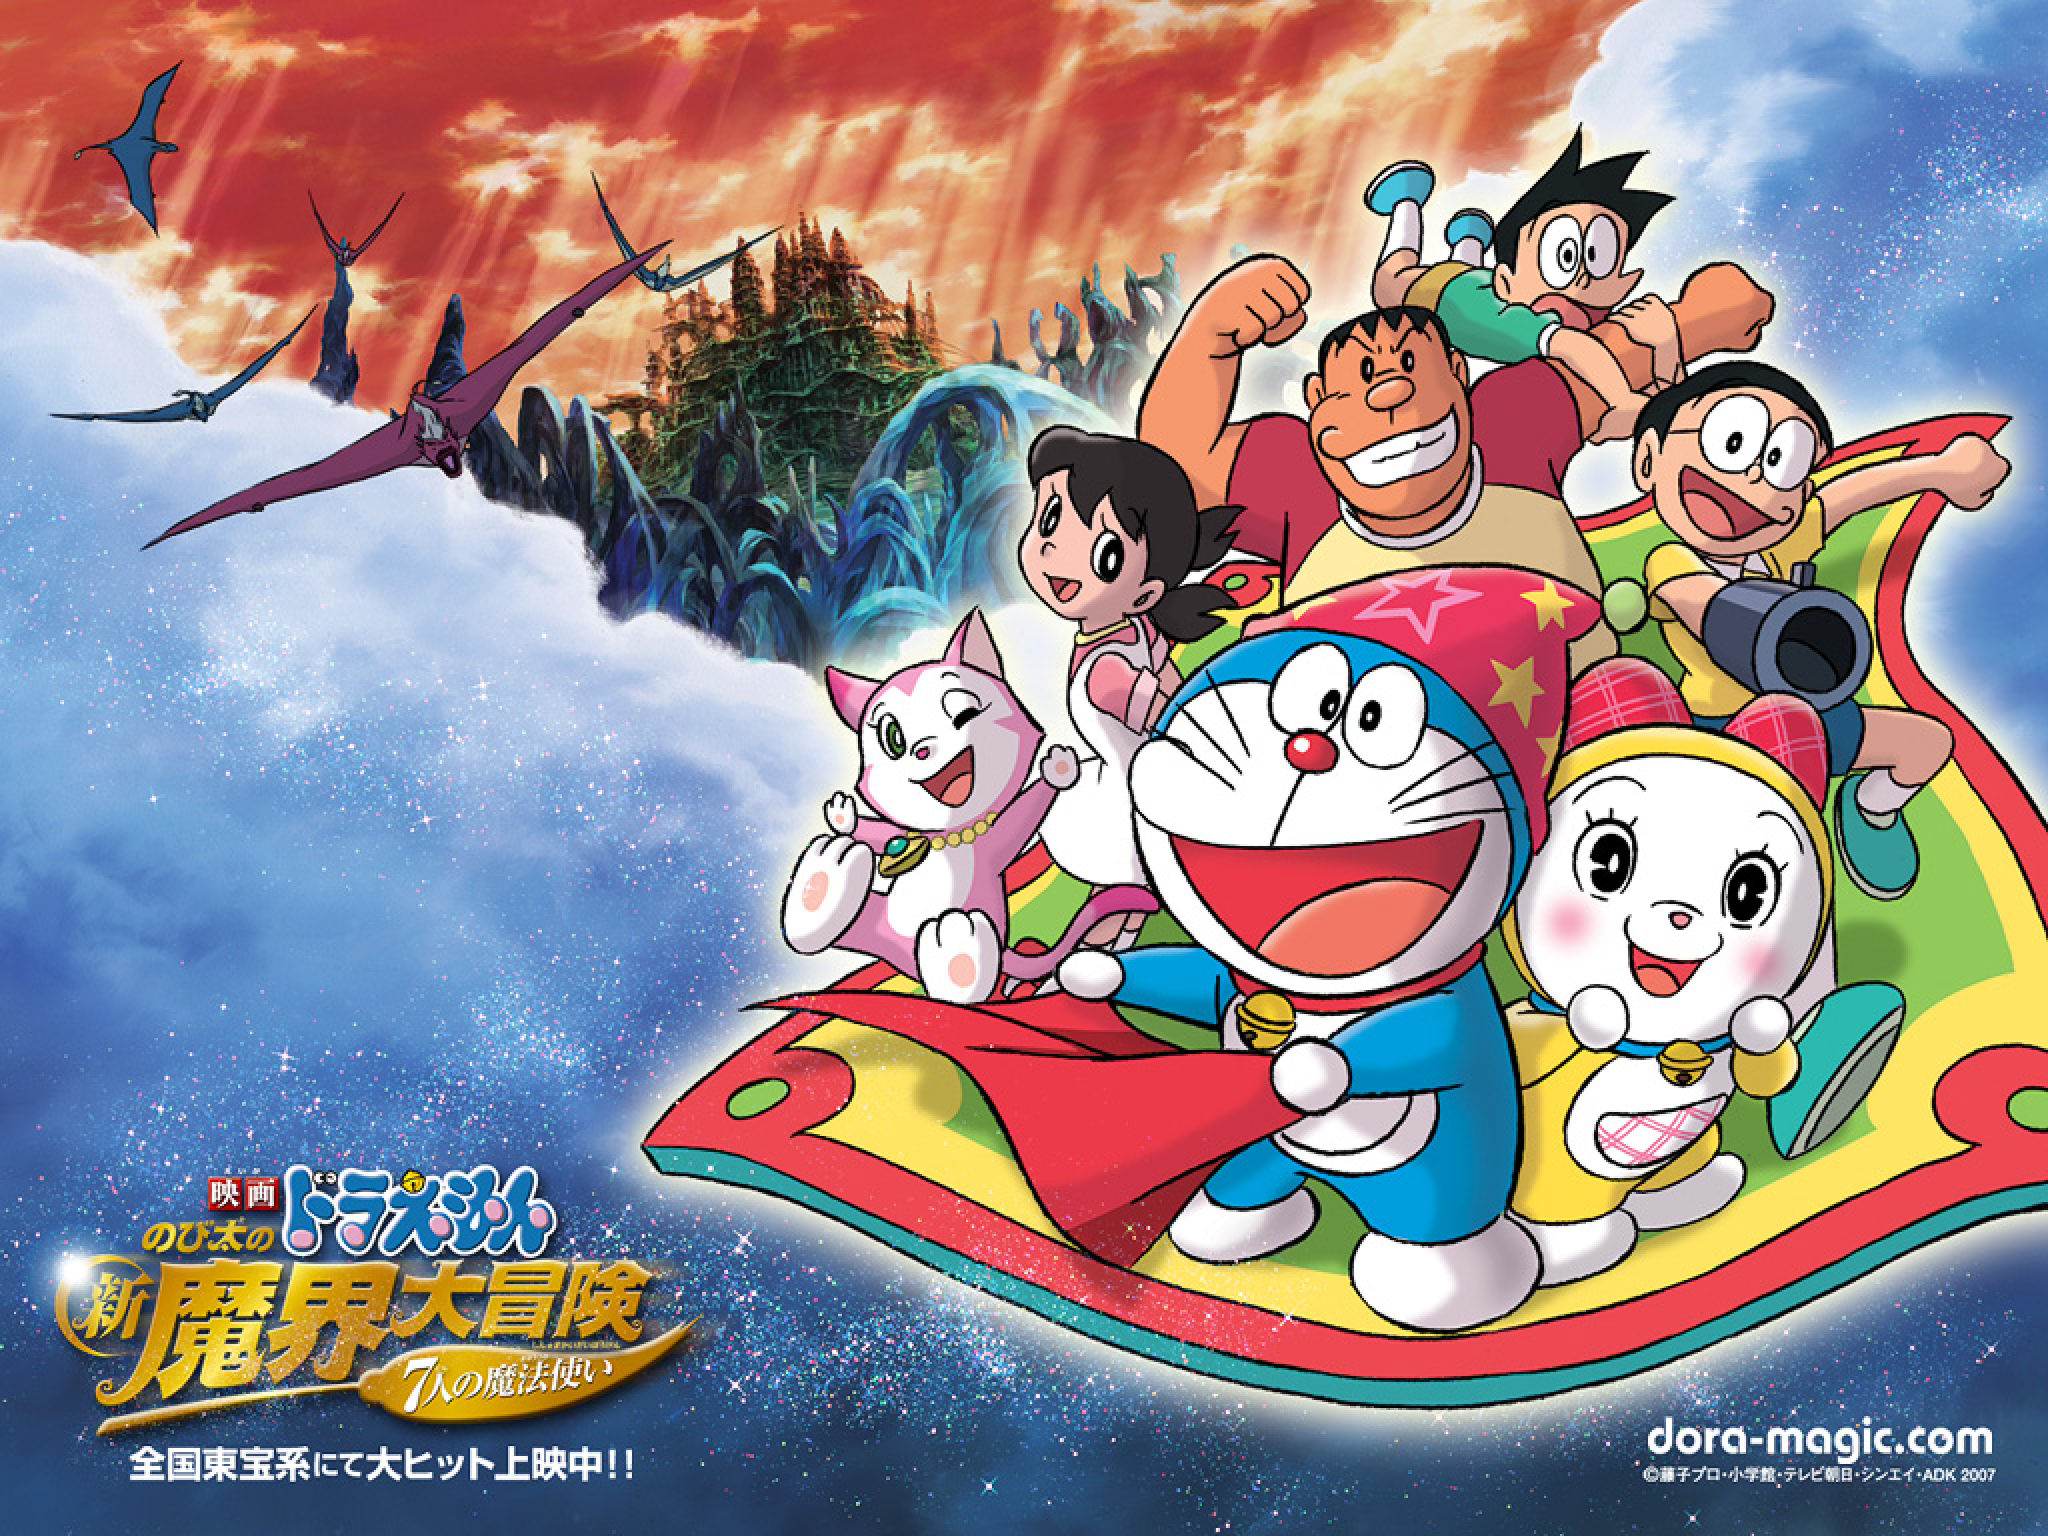 Doraemon and Friends Group Photo-At the Beach by doraemon-suneo on  DeviantArt